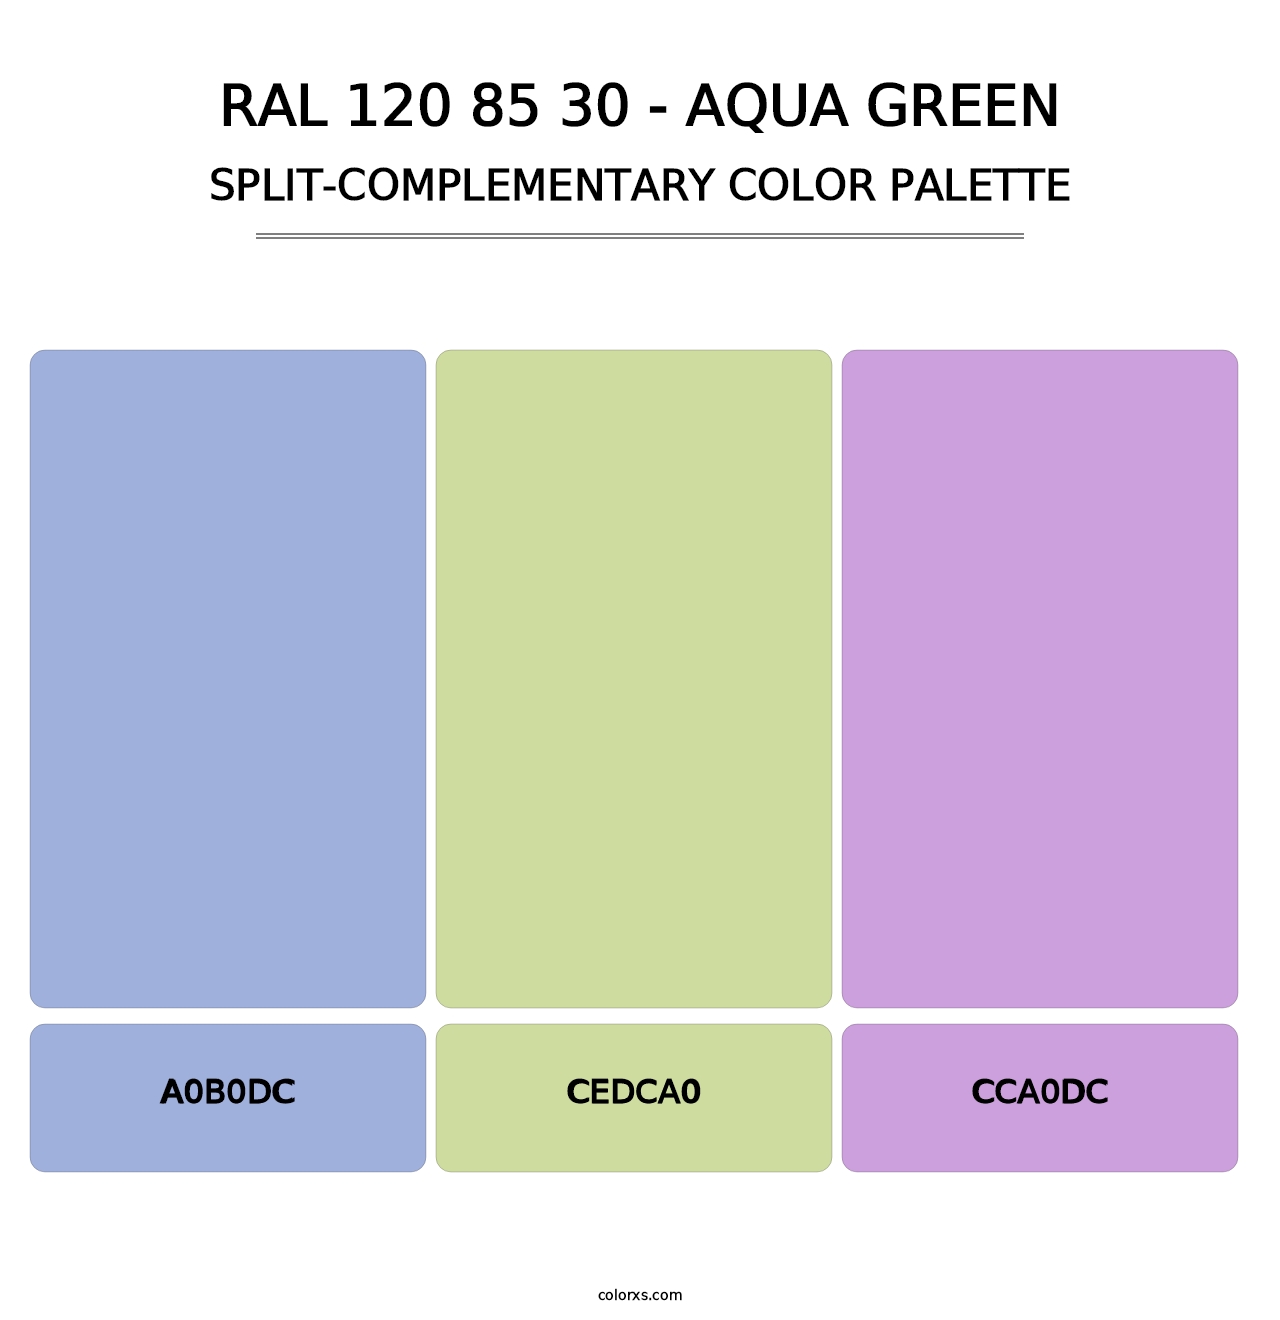 RAL 120 85 30 - Aqua Green - Split-Complementary Color Palette